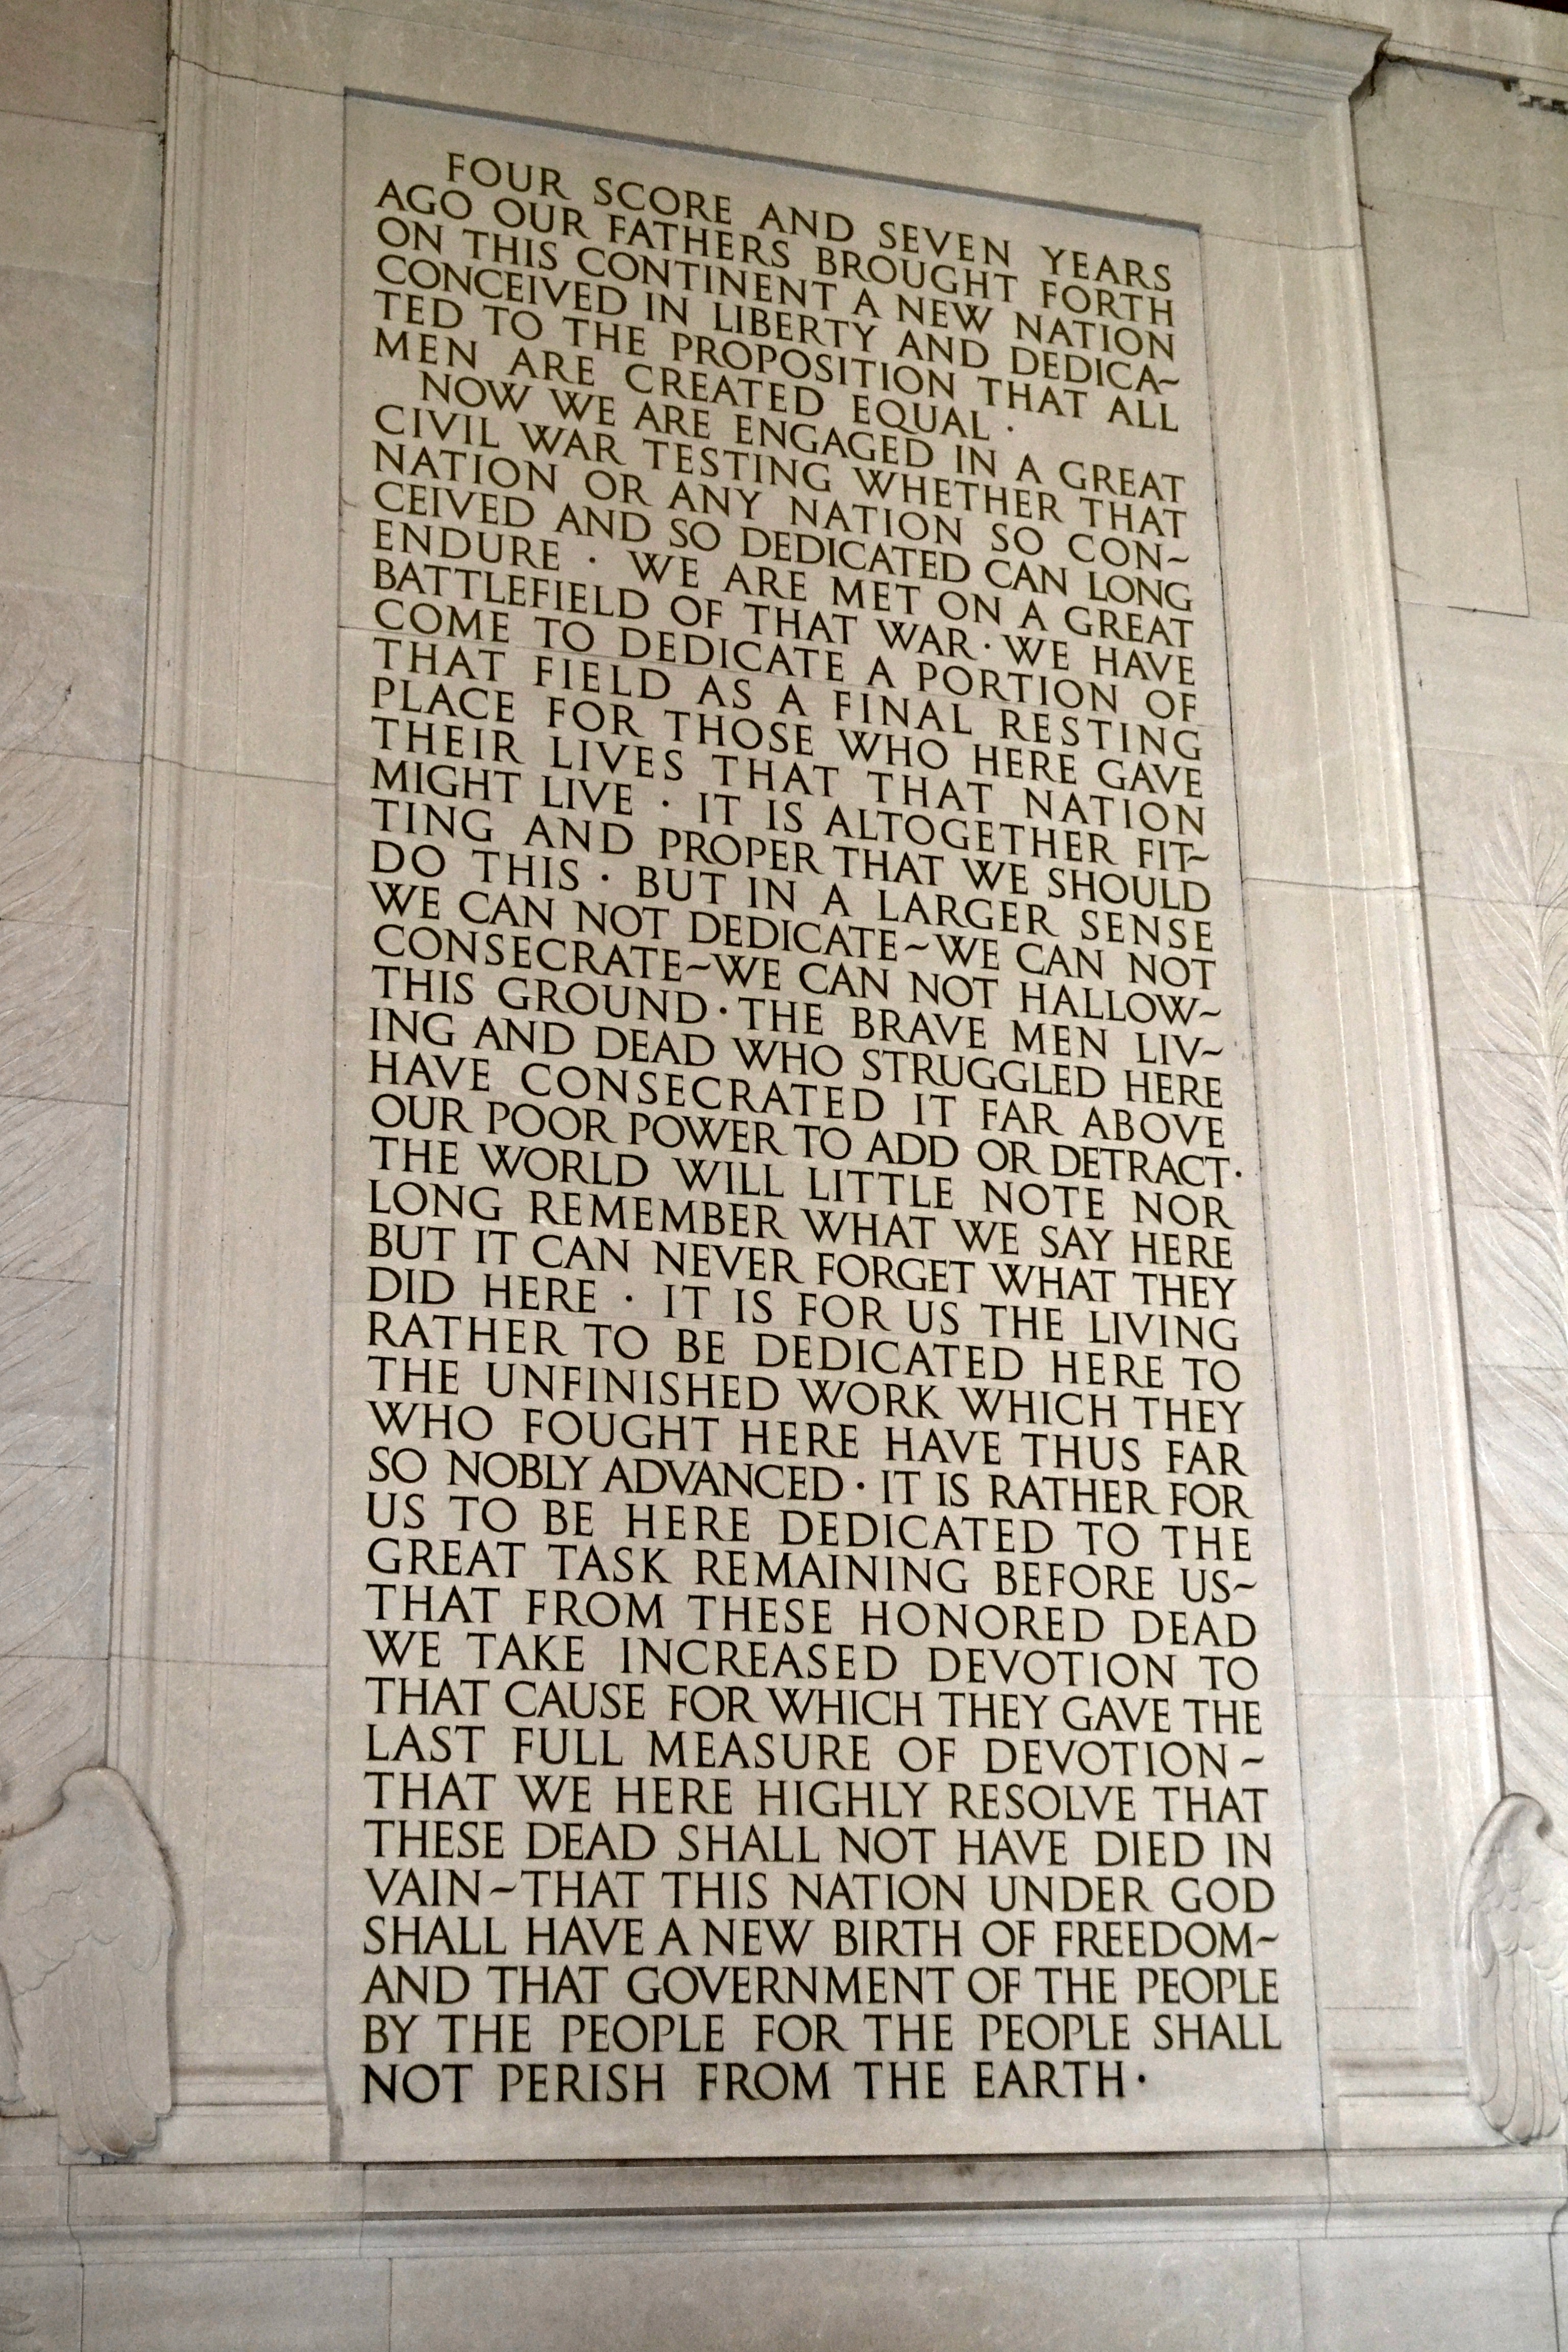 Abraham Lincoln's Gettysburg Address Inscribed at Lincoln Memorial, Washington, D.C. Photo taken on September 1, 2012.